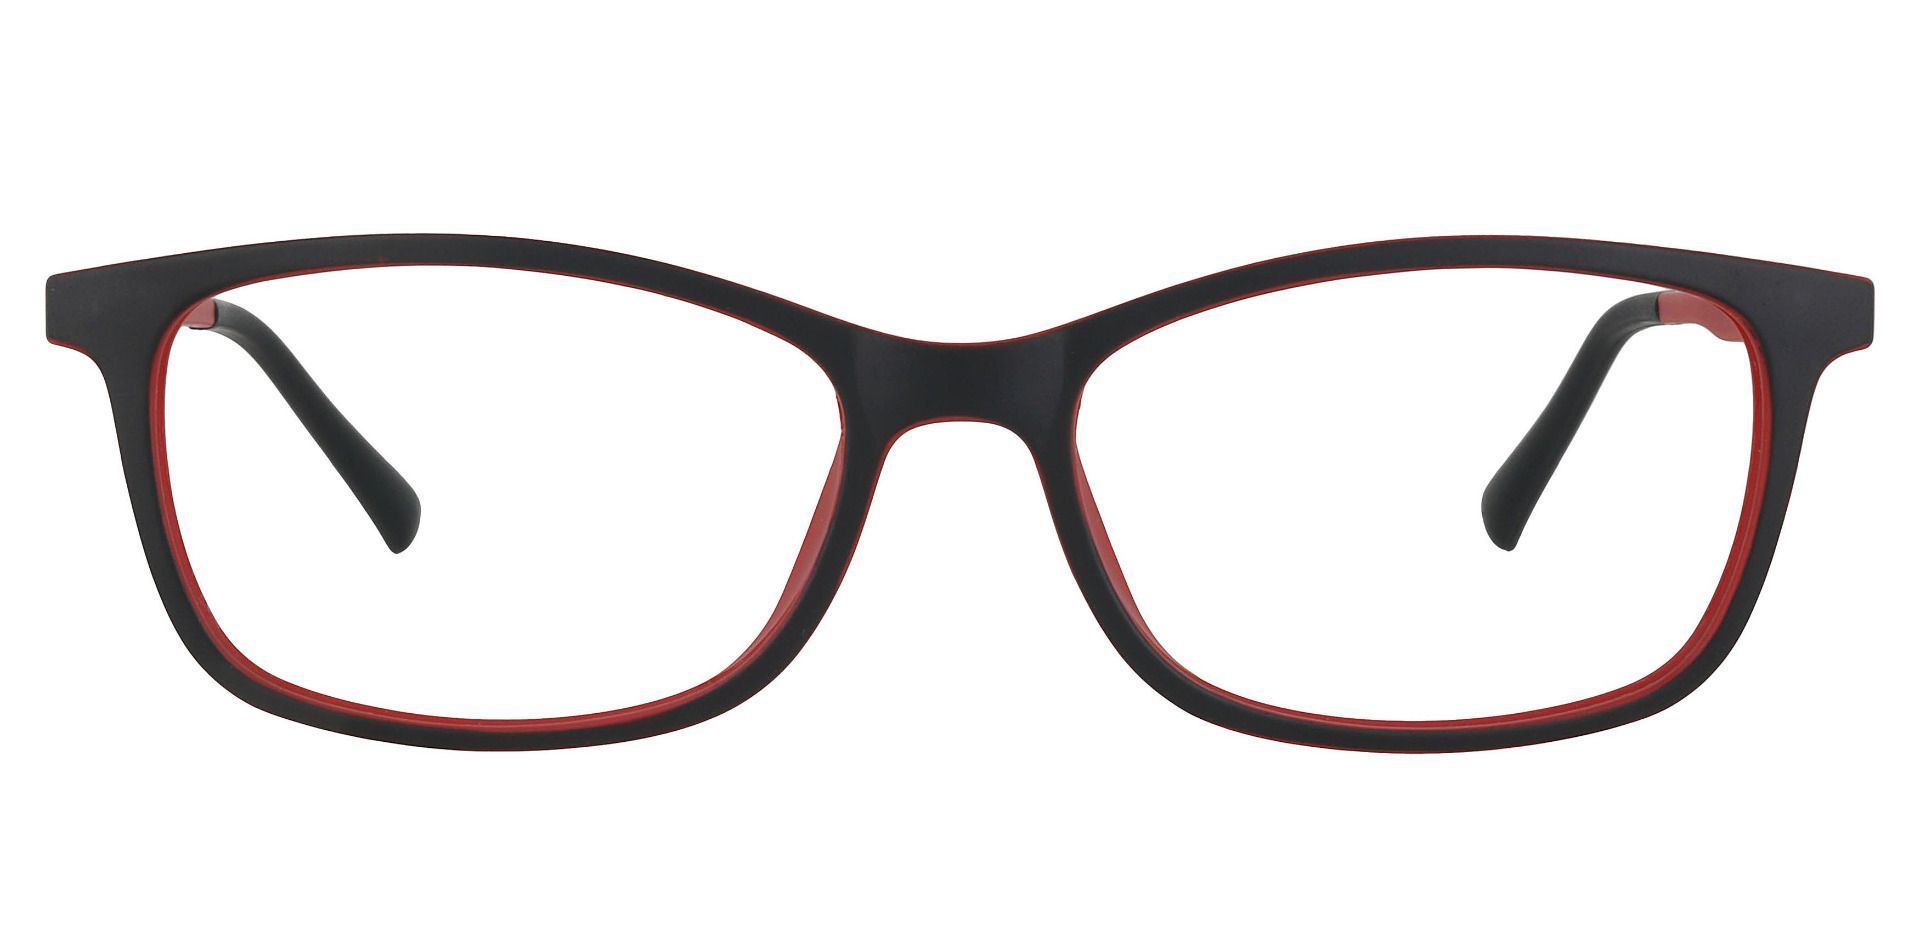 Segura Oval Reading Glasses - Red